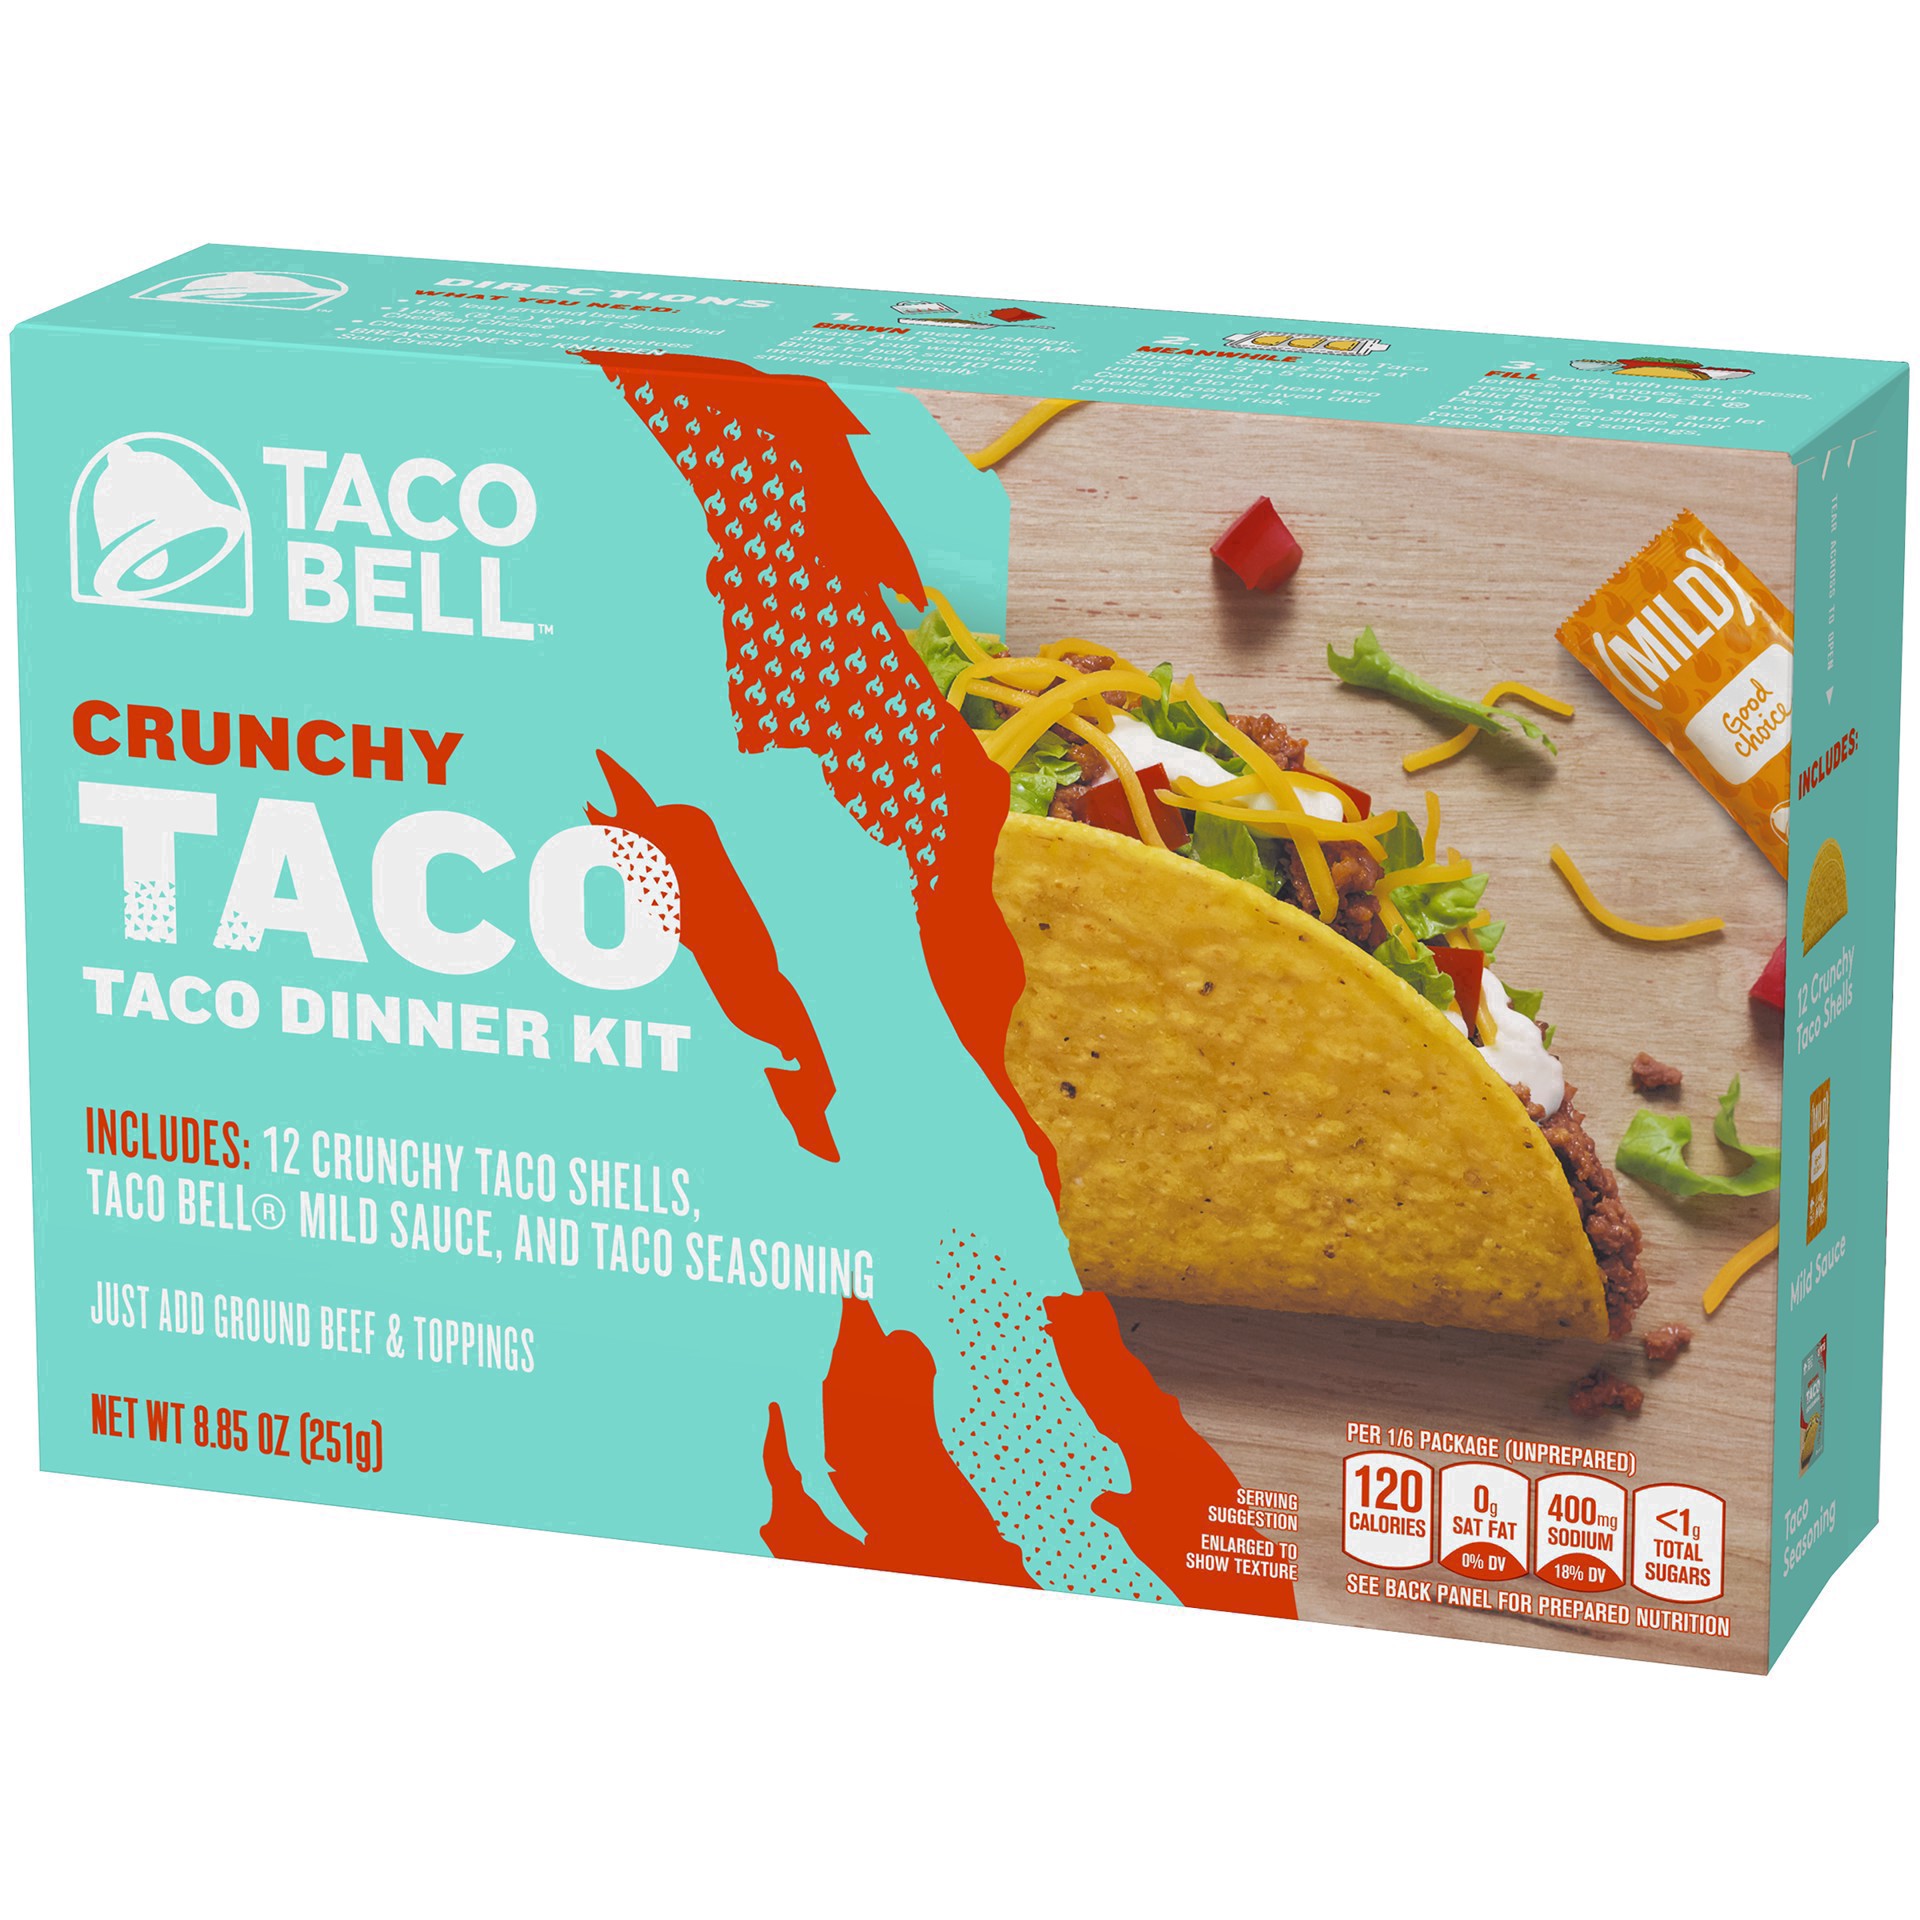 slide 46 of 91, Taco Bell Crunchy Taco Cravings Kit with 12 Crunchy Taco Shells, Taco Bell Mild Sauce & Seasoning, 8.85 oz Box, 1 ct